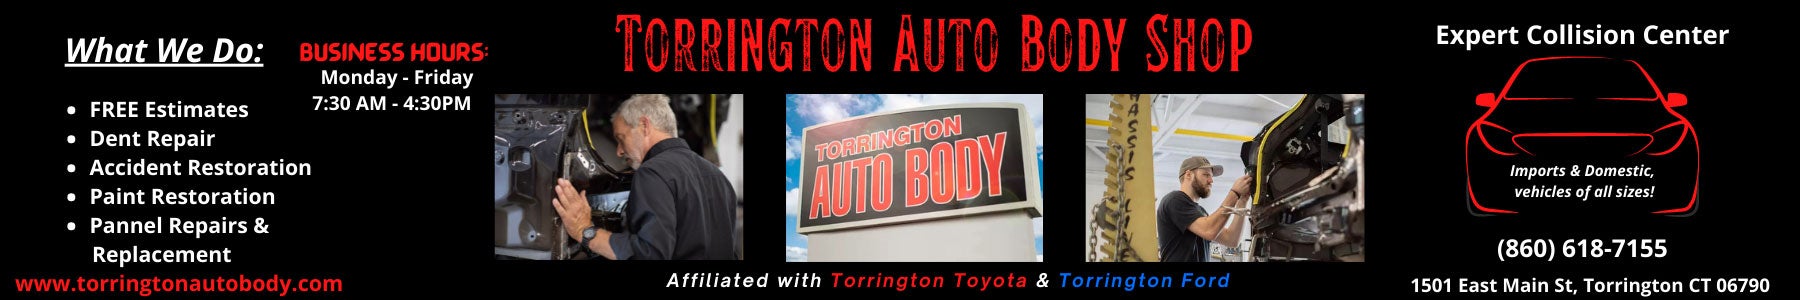 Auto Body Shop | Torrington Ford in Torrington CT